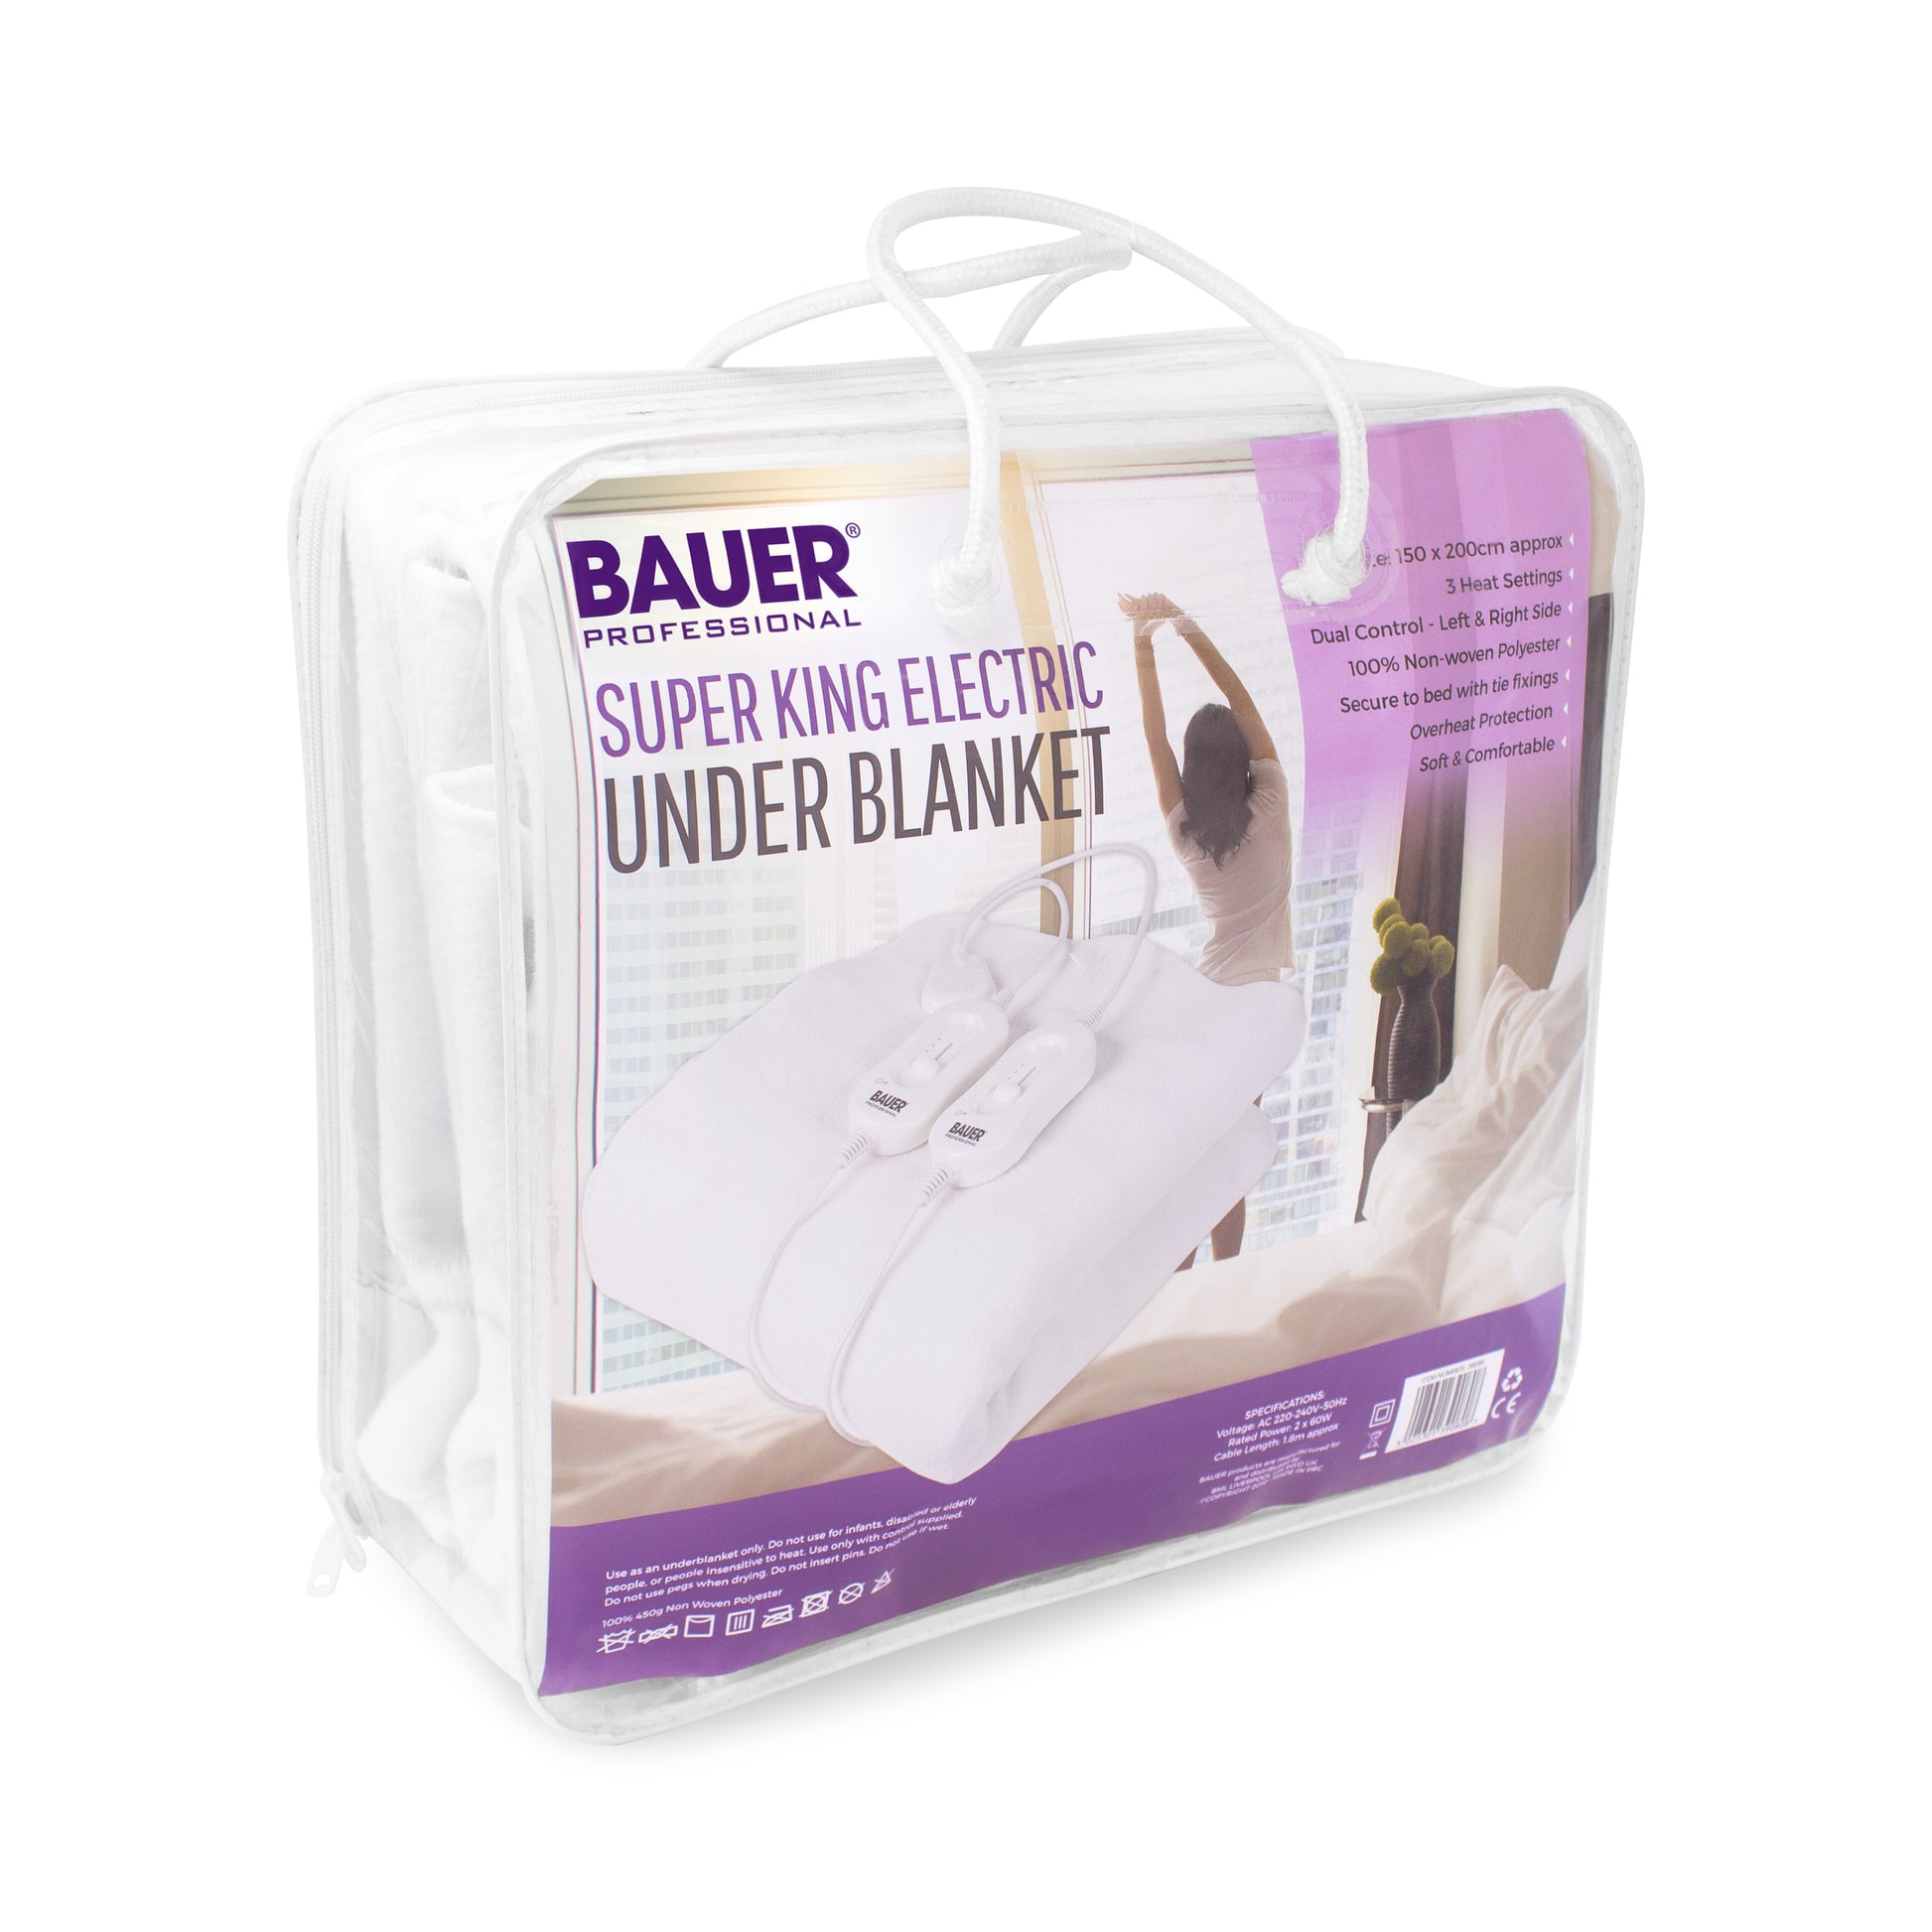 Bauer Electric Under Blanket - Superking